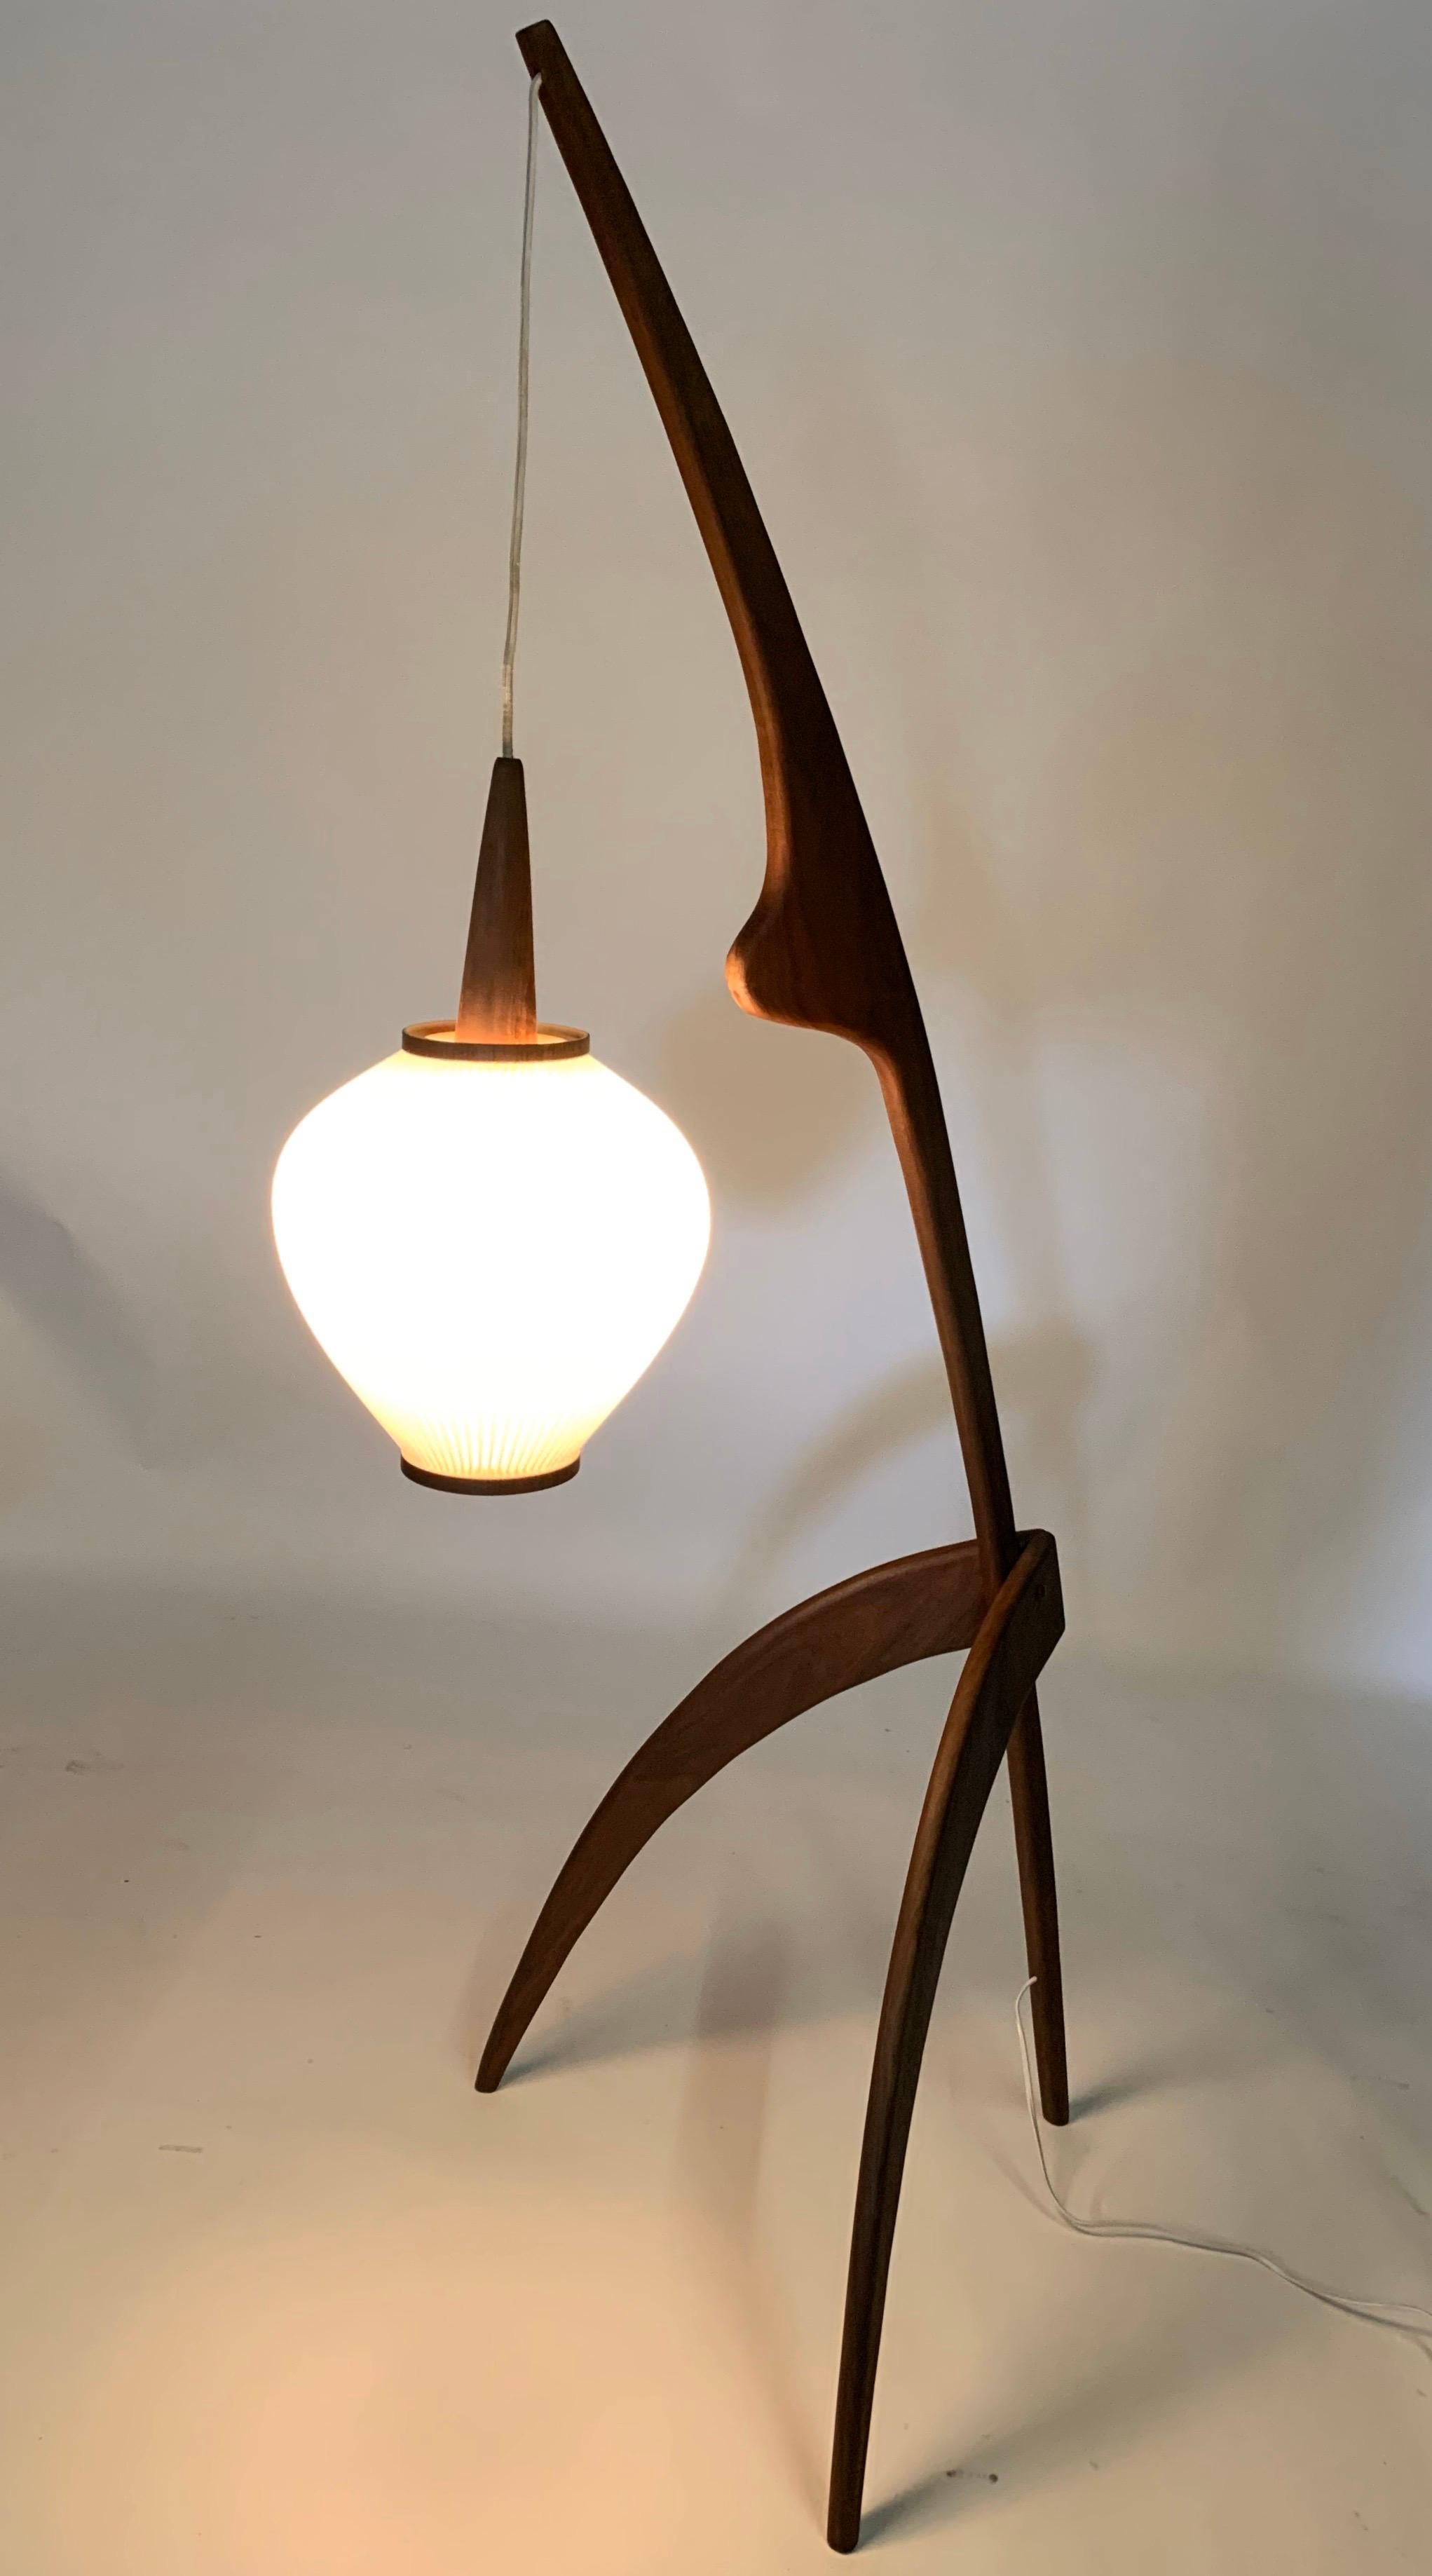 Carved Jean Rispal “Praying Mantis” Floor Lamp in Walnut-France designed, circa 1950